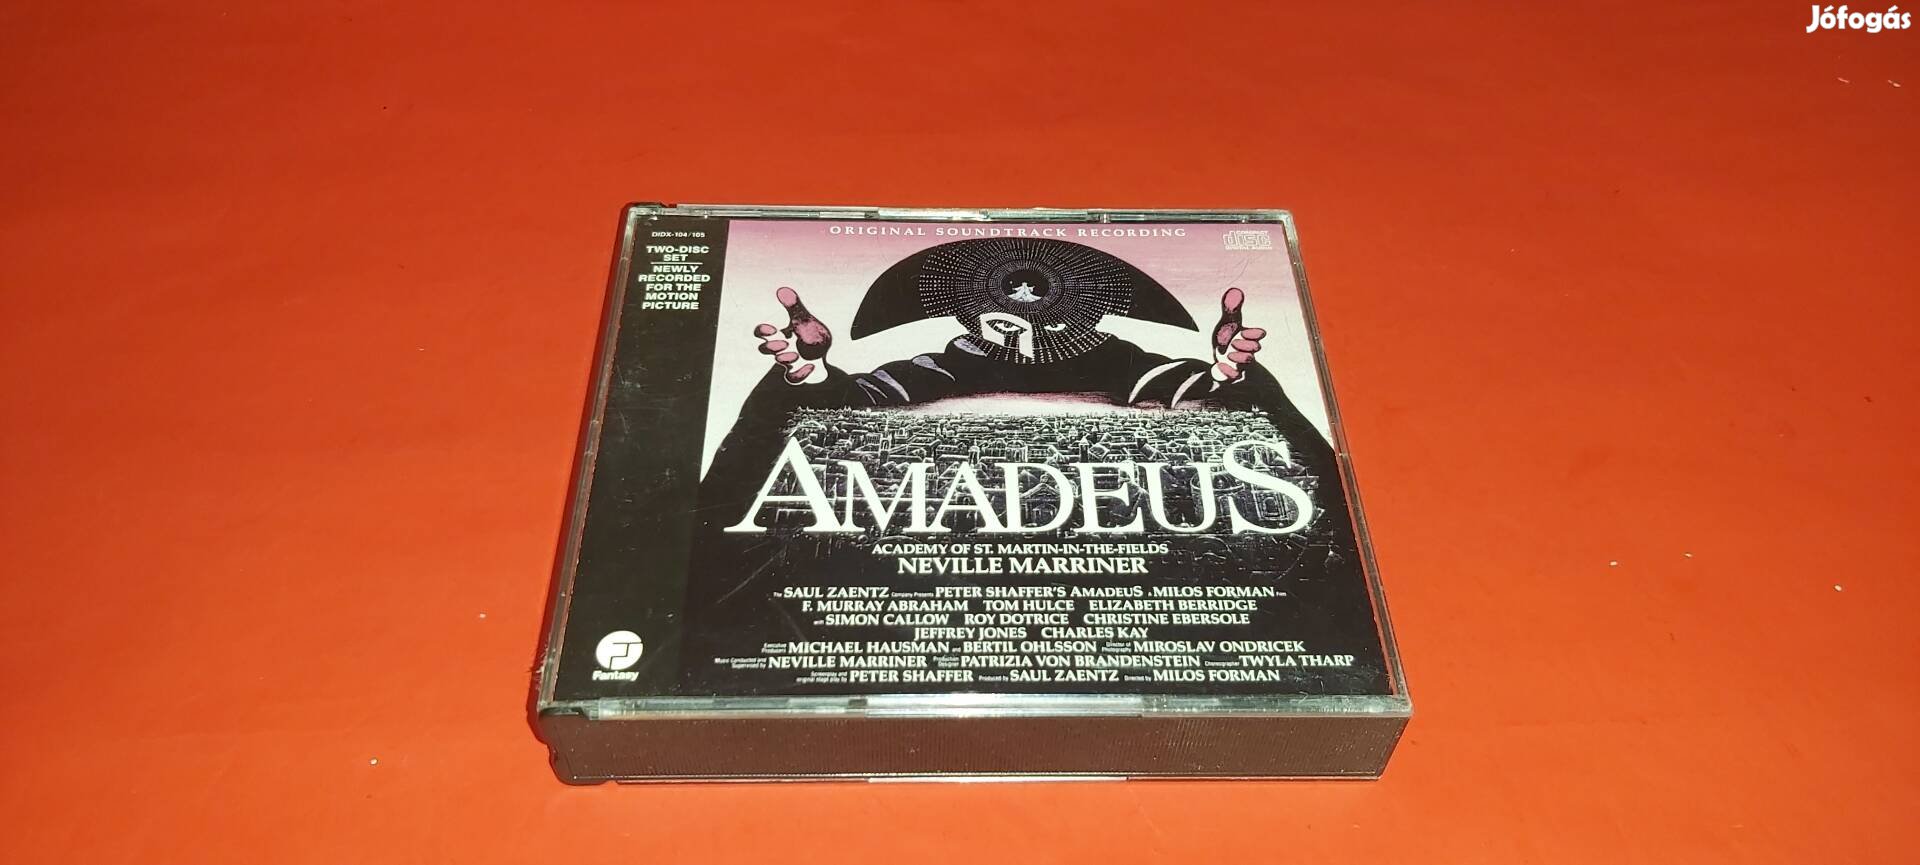 Neville Marriner Amadeus Soundtrack dupla Cd box U.S.A